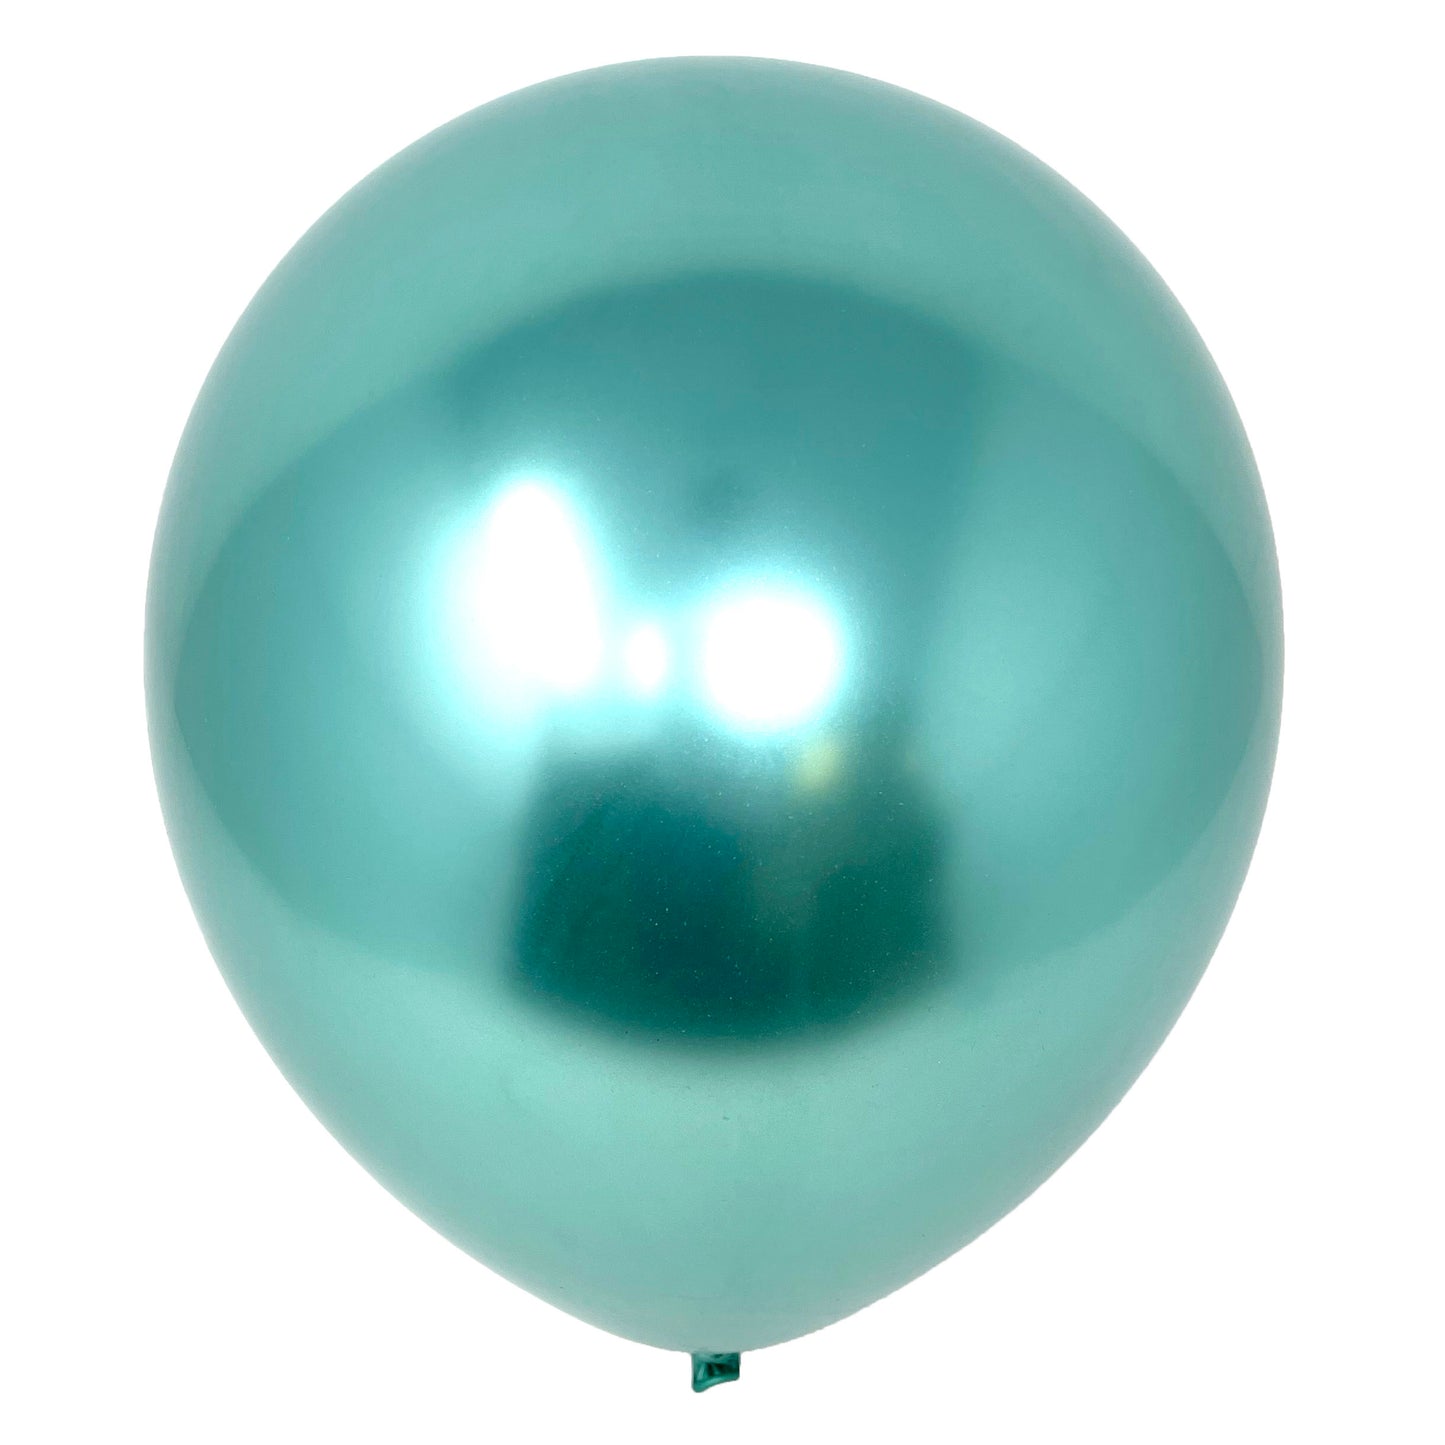 Allgala Balloons 12" 50 Count 2.8g Premium Heavy Metallic Chrome Latex Balloons